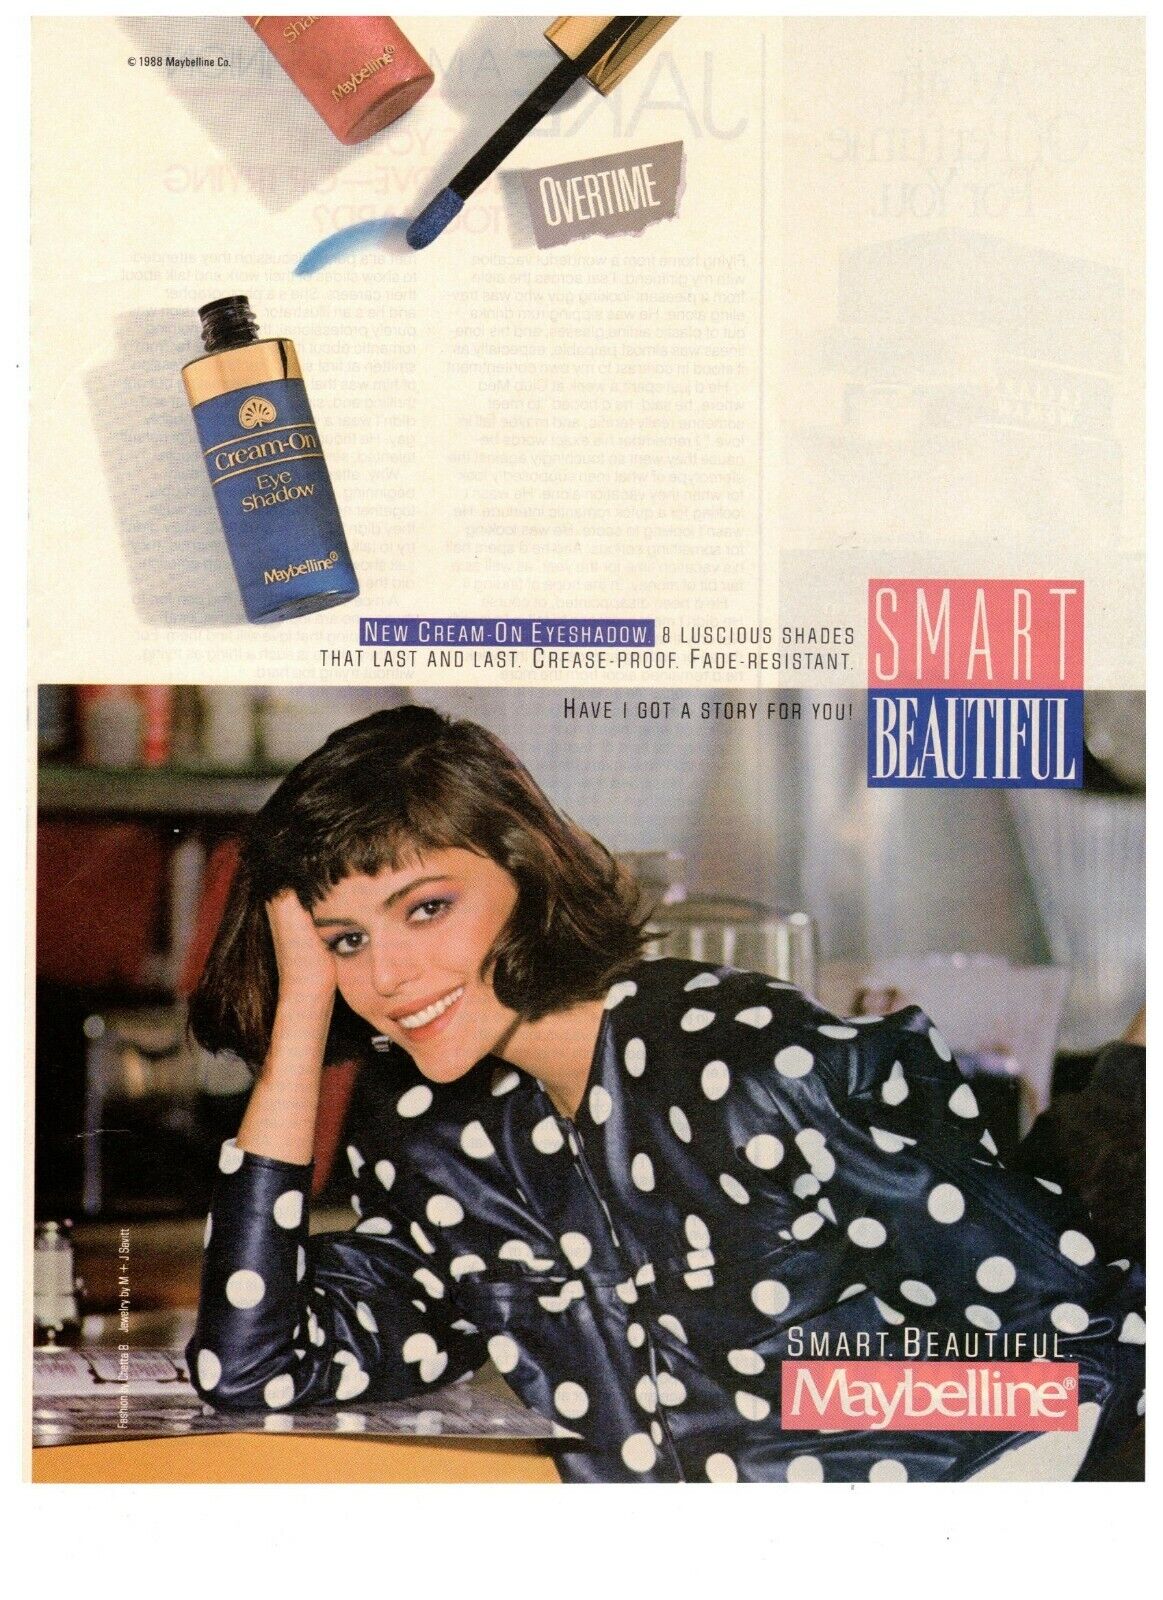 Maybelline Smart Beautiful Cream On Eyeshadow Vintage 1988 Print Ad